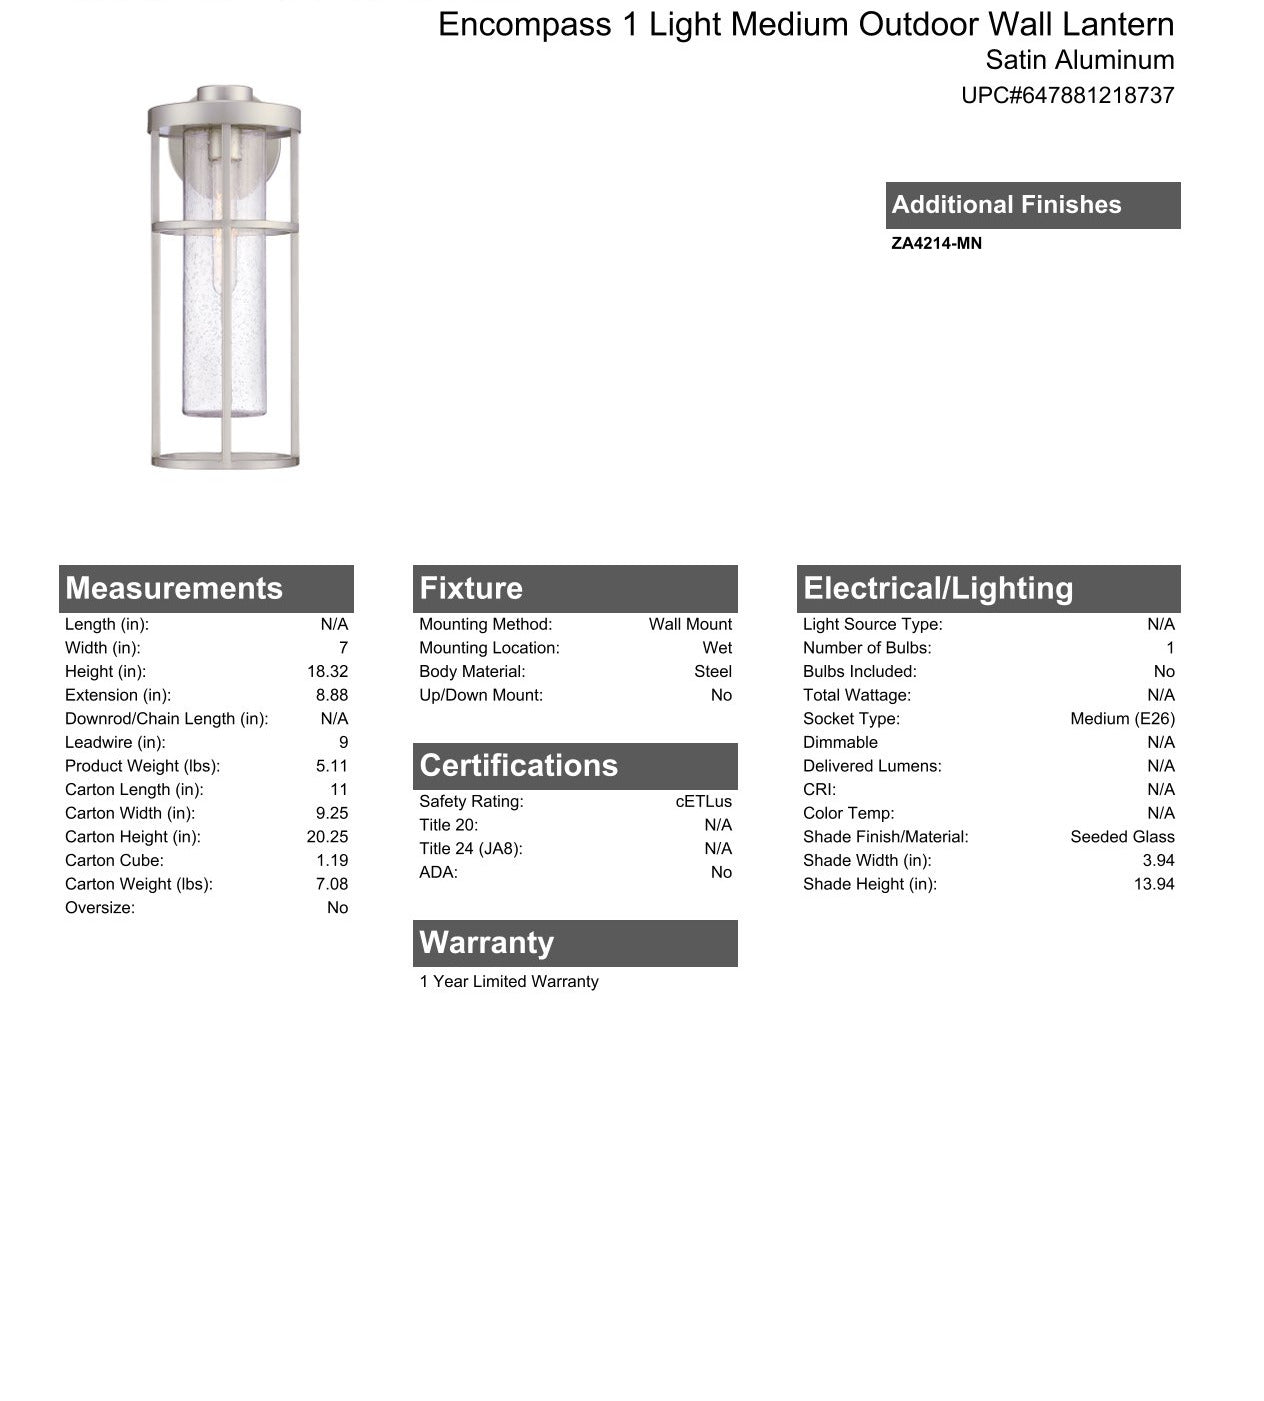 Encompass 1 Light Medium Outdoor Wall Lantern in Satin Aluminum